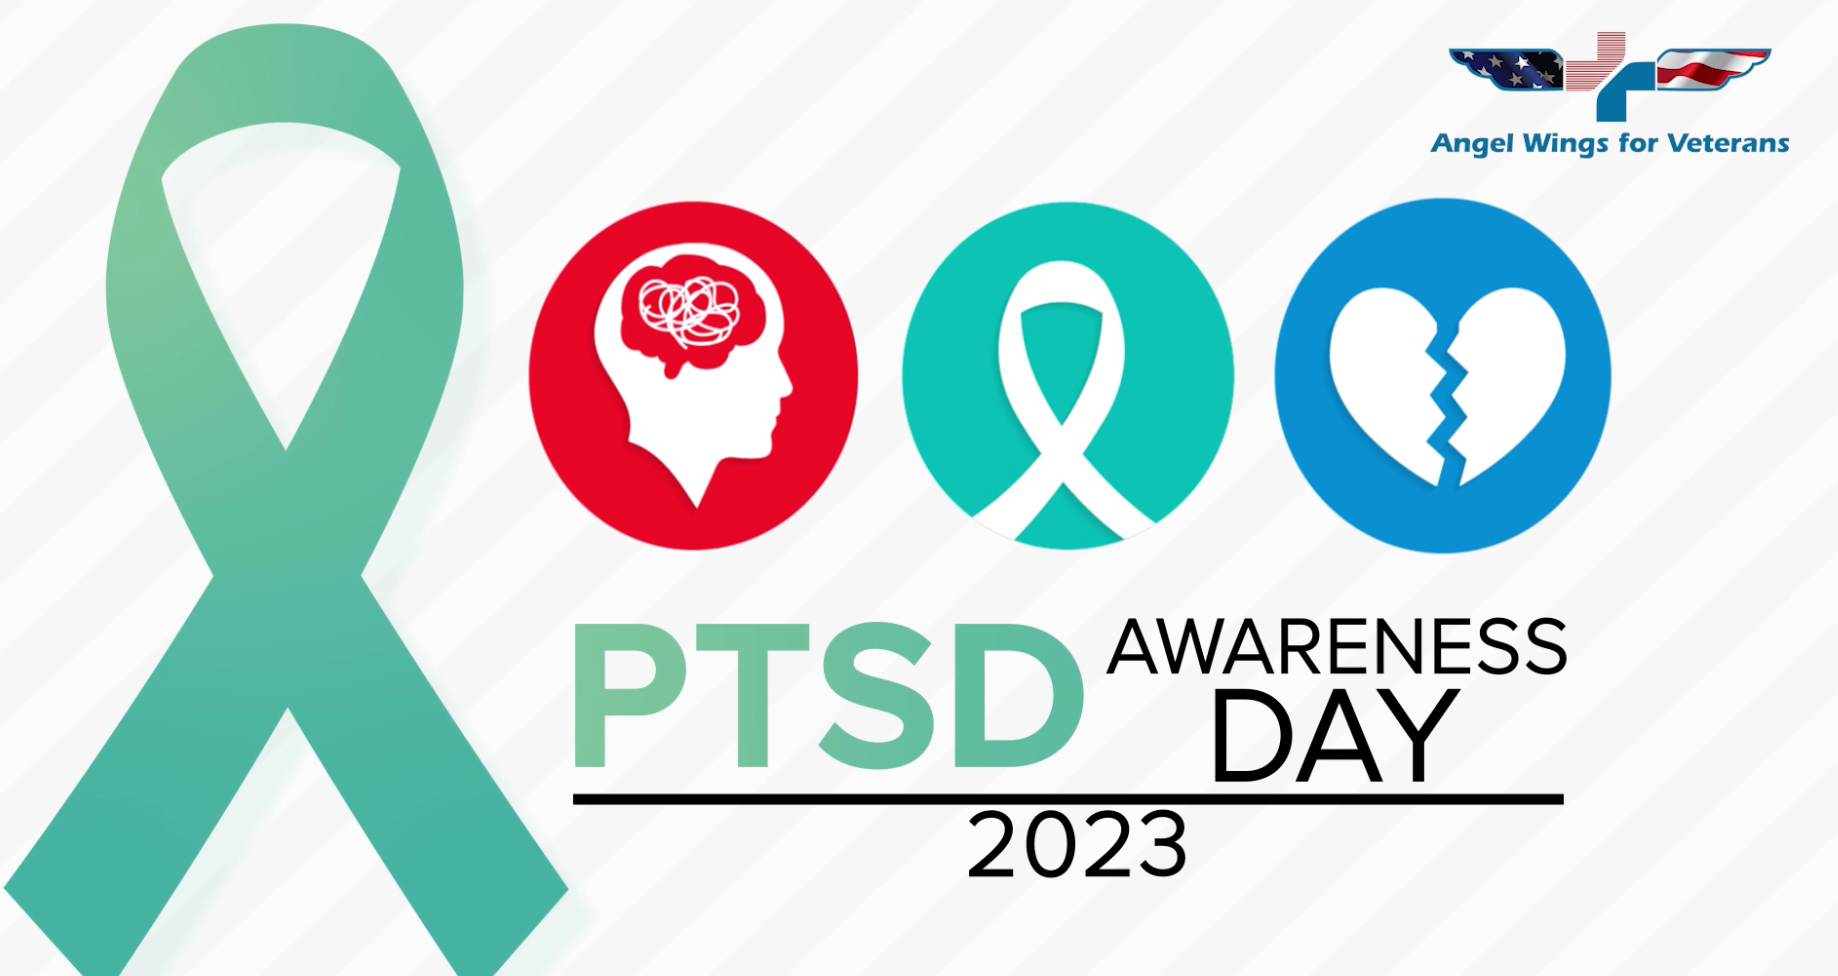 Video for PTSD Awareness Day 2023